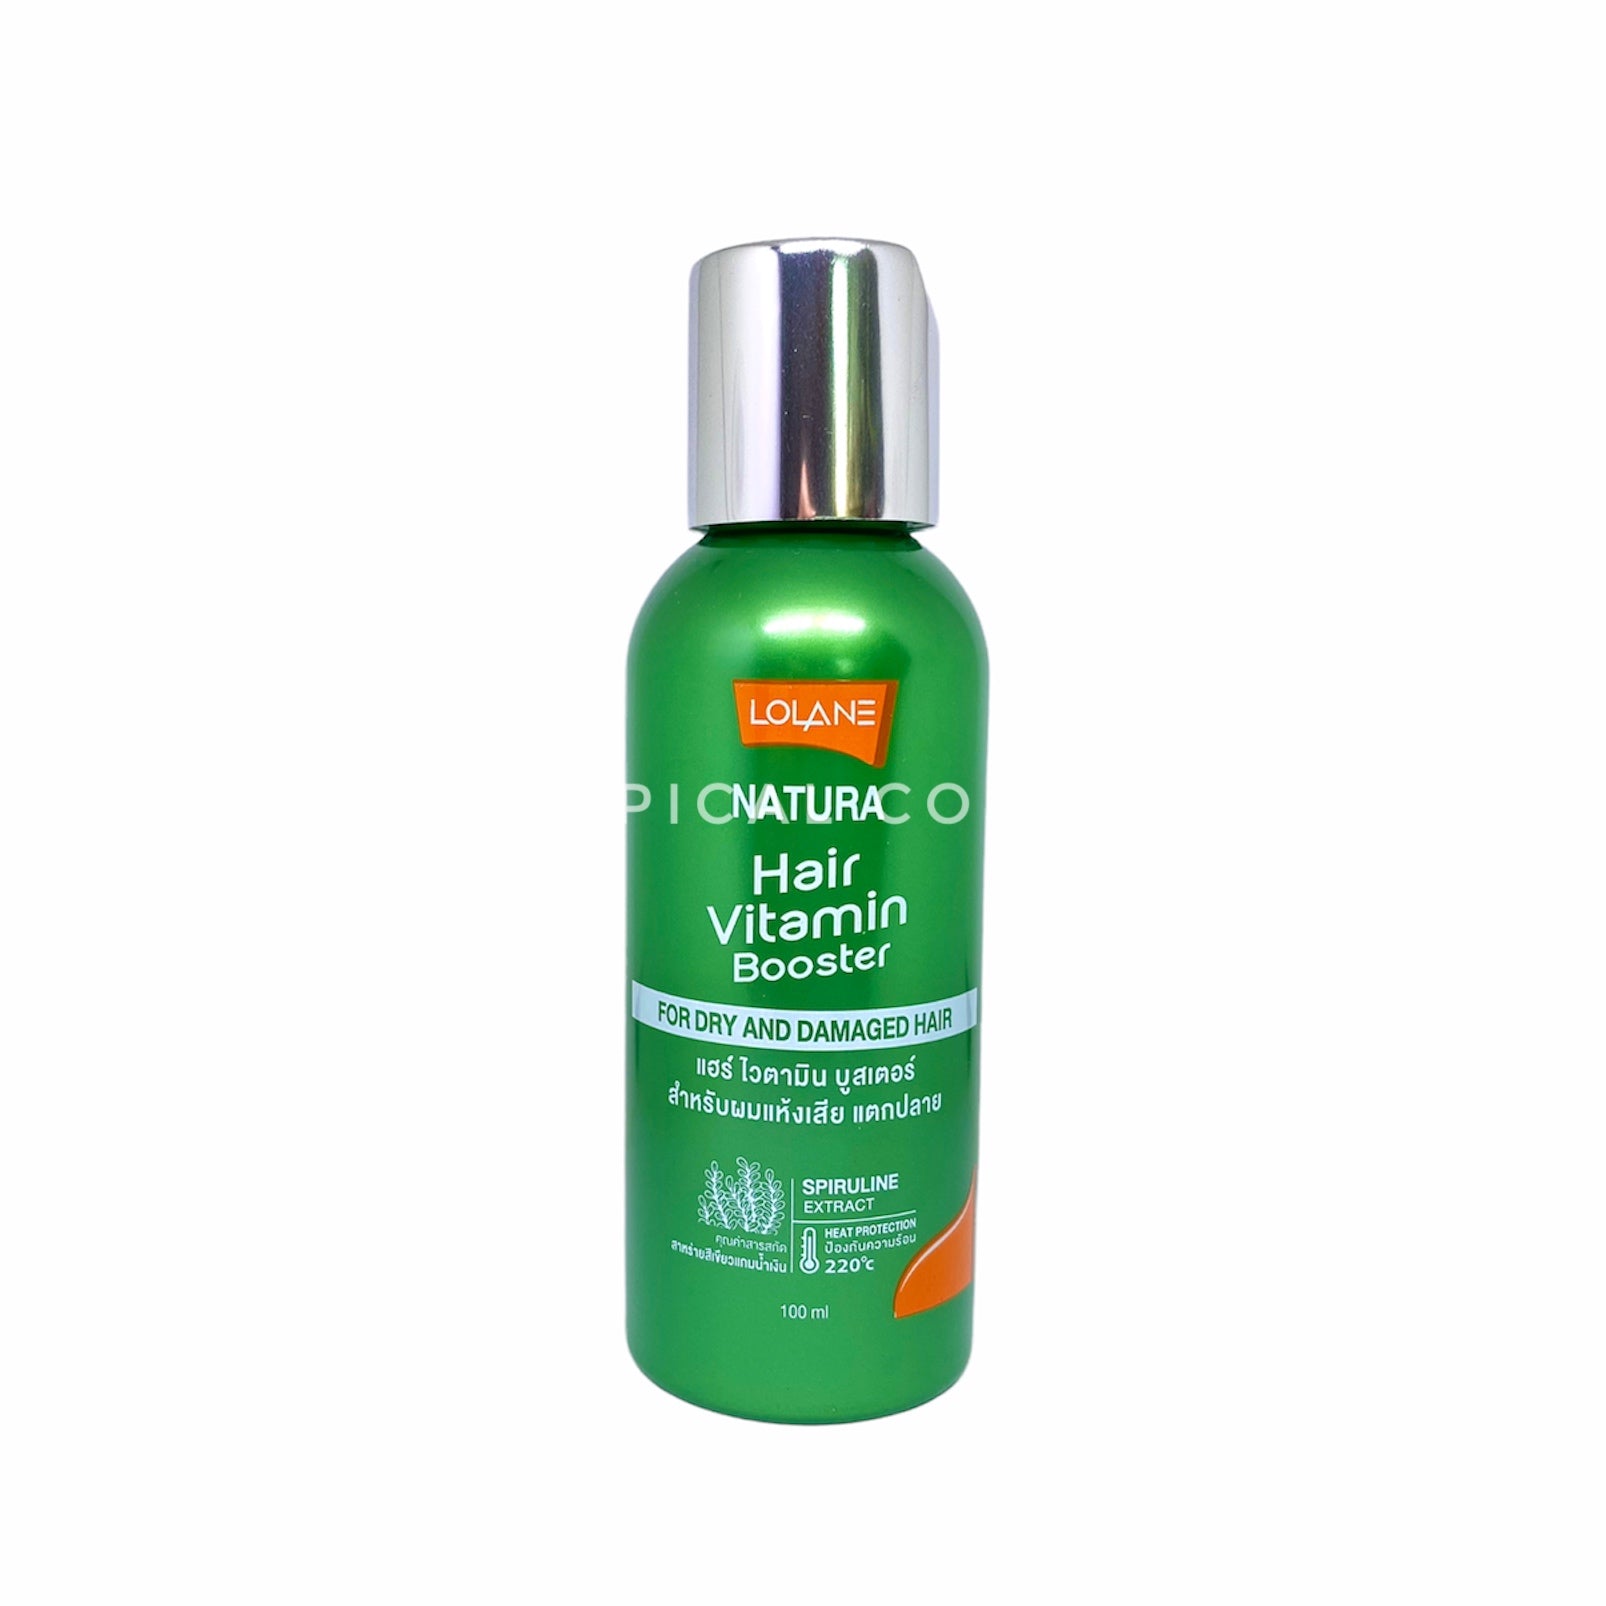 LOLANE Natura Hair Vitamin Booster For Dry And Damaged Hair (Green) 100 ml., Сыворотка-бустер для поврежденных и сухих волос 100 мл.